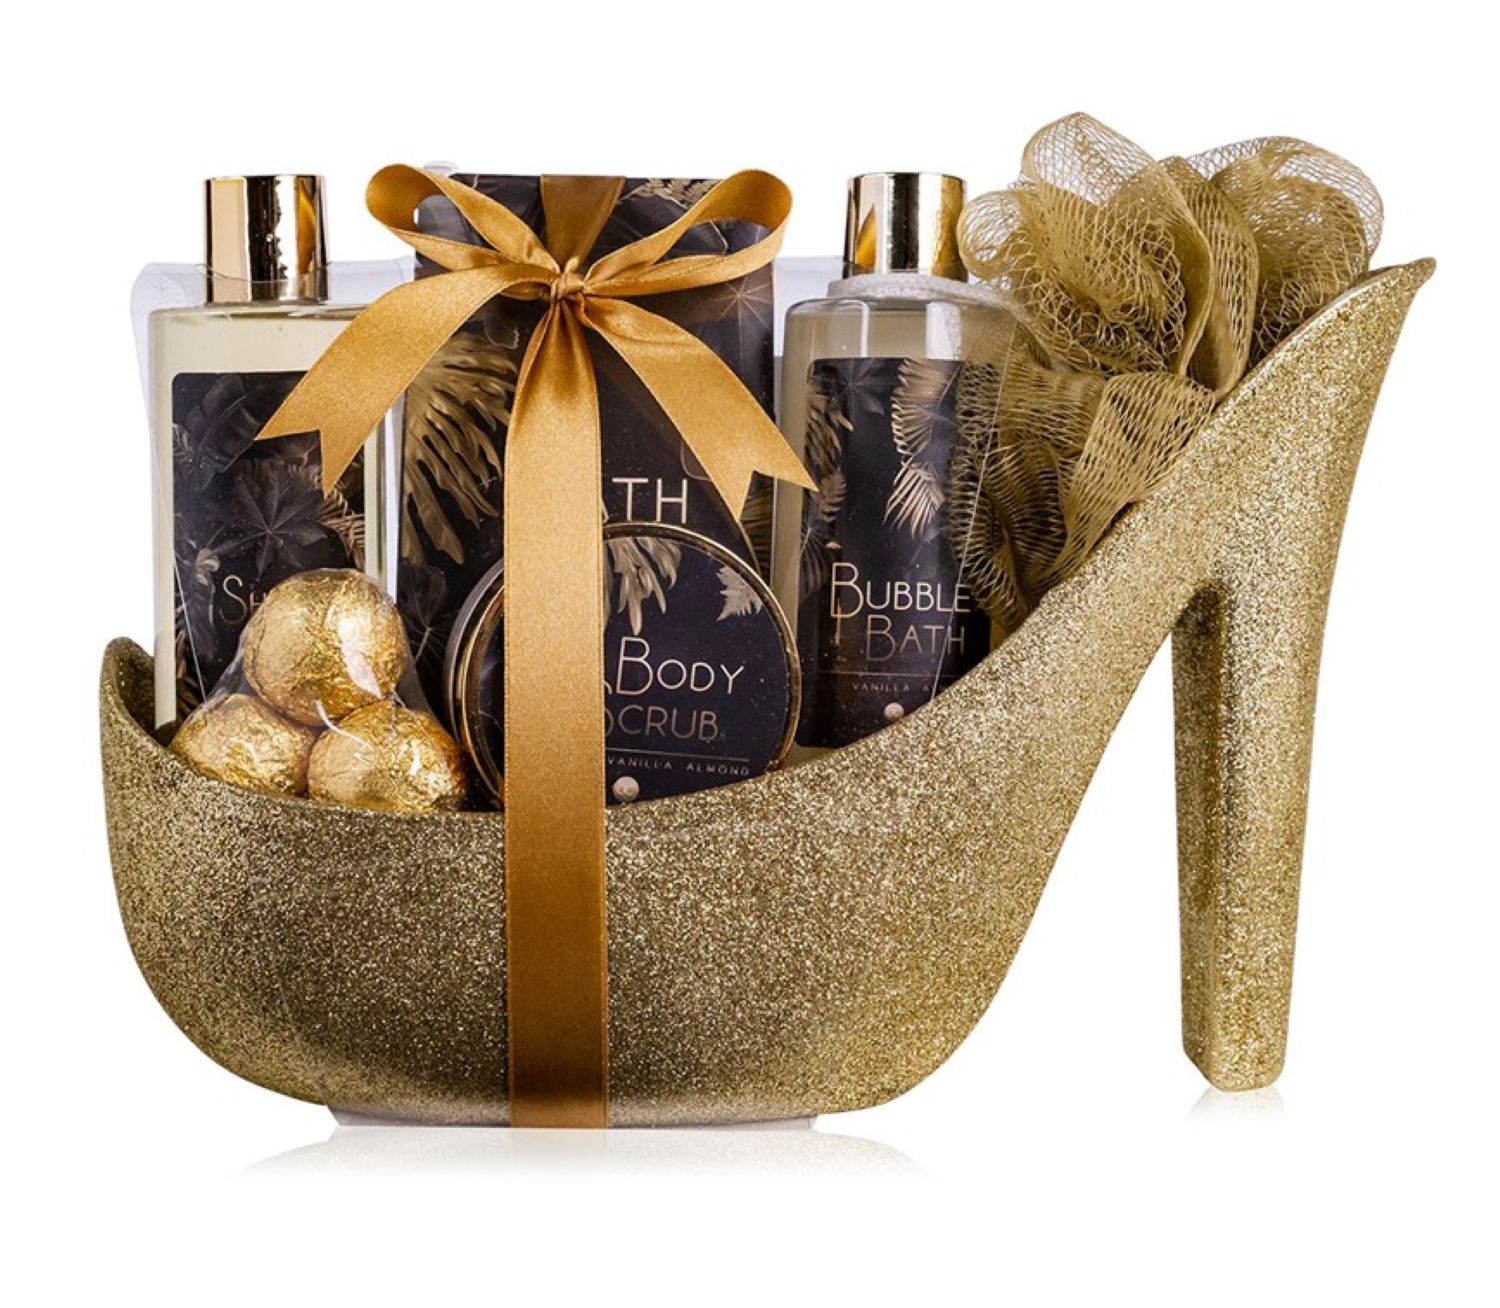 Set Cadou Luxury cu 6 produse aroma vanilie si migdale in pantof auriu sidefat